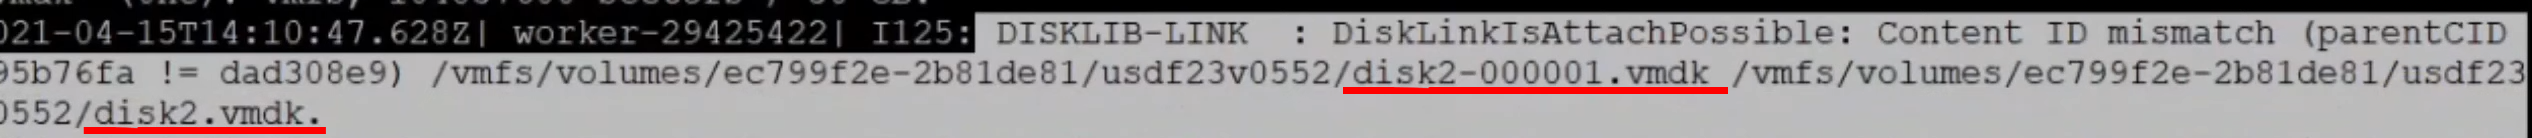 DISKLIB-LINK text on Putty Terminal.